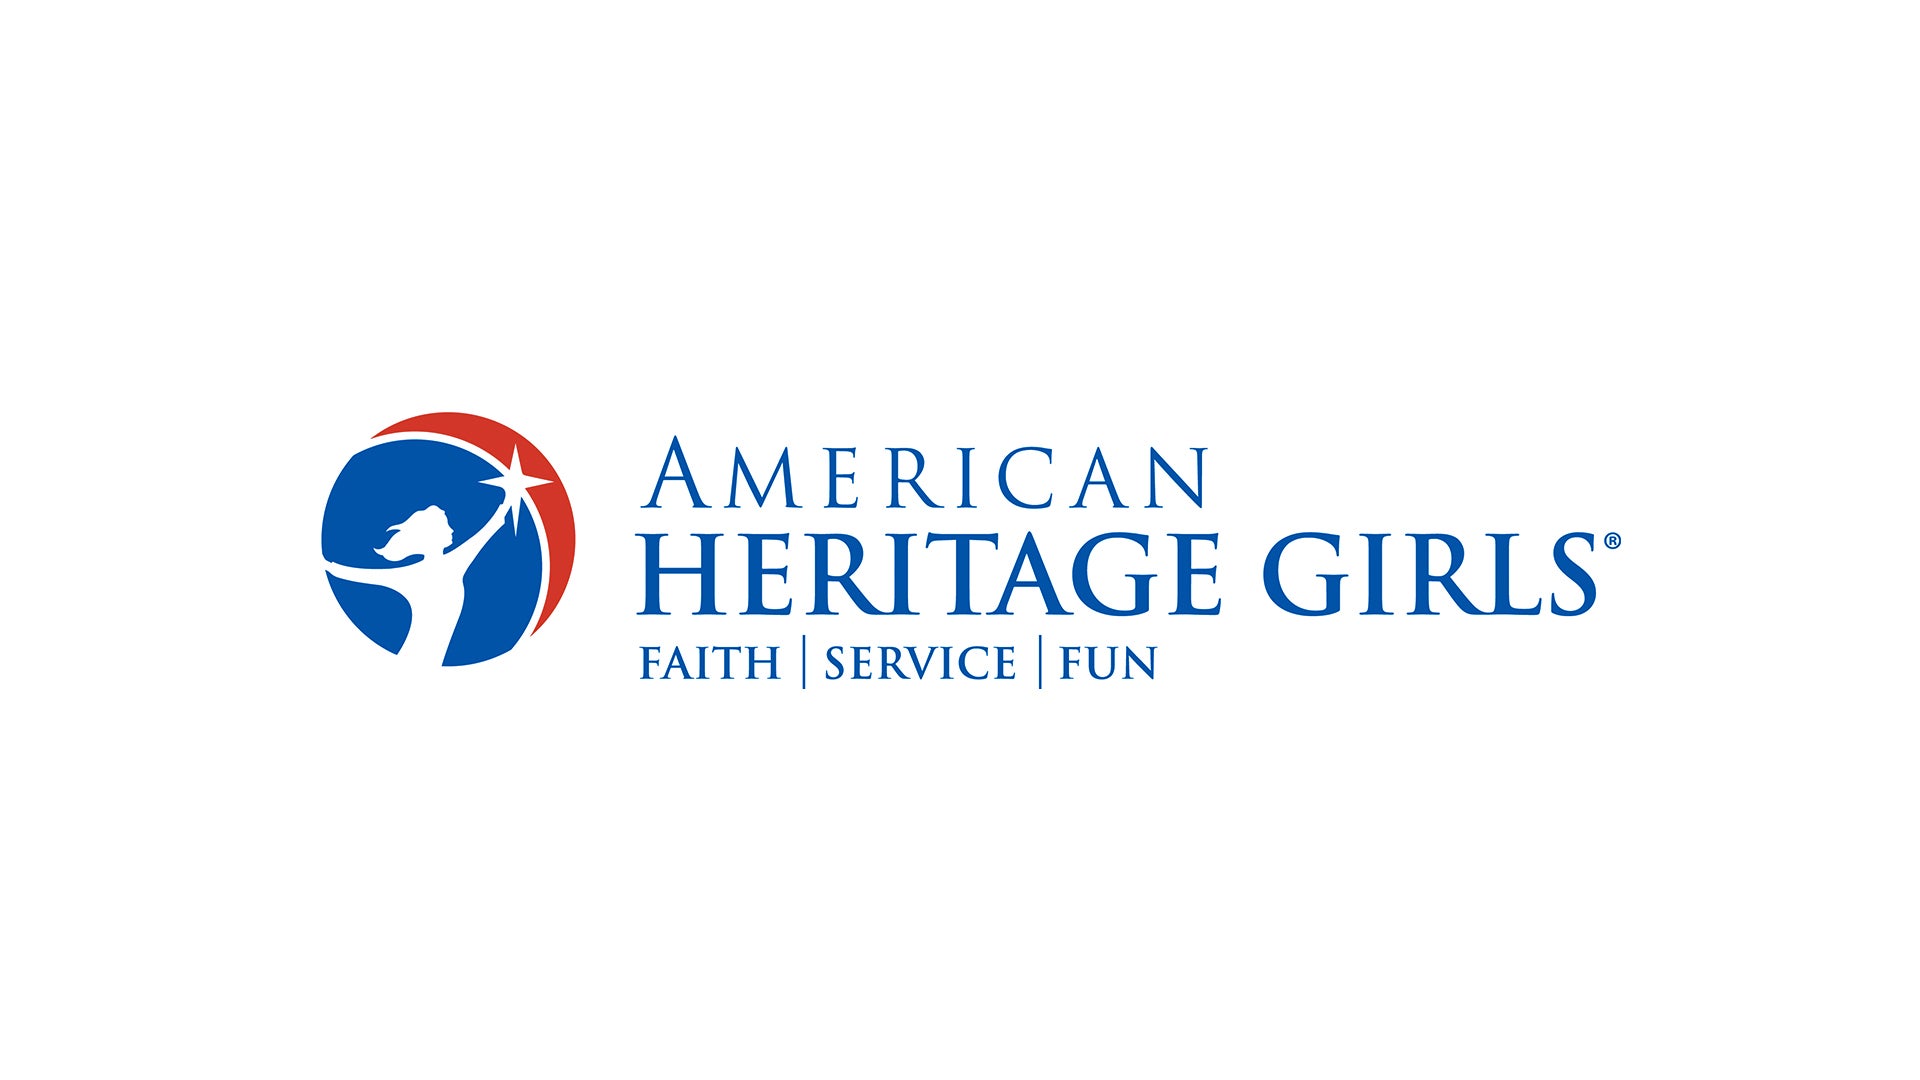 Faith, Service, Fun: Faith-Based Scouting Group for Girls Teaches All ...